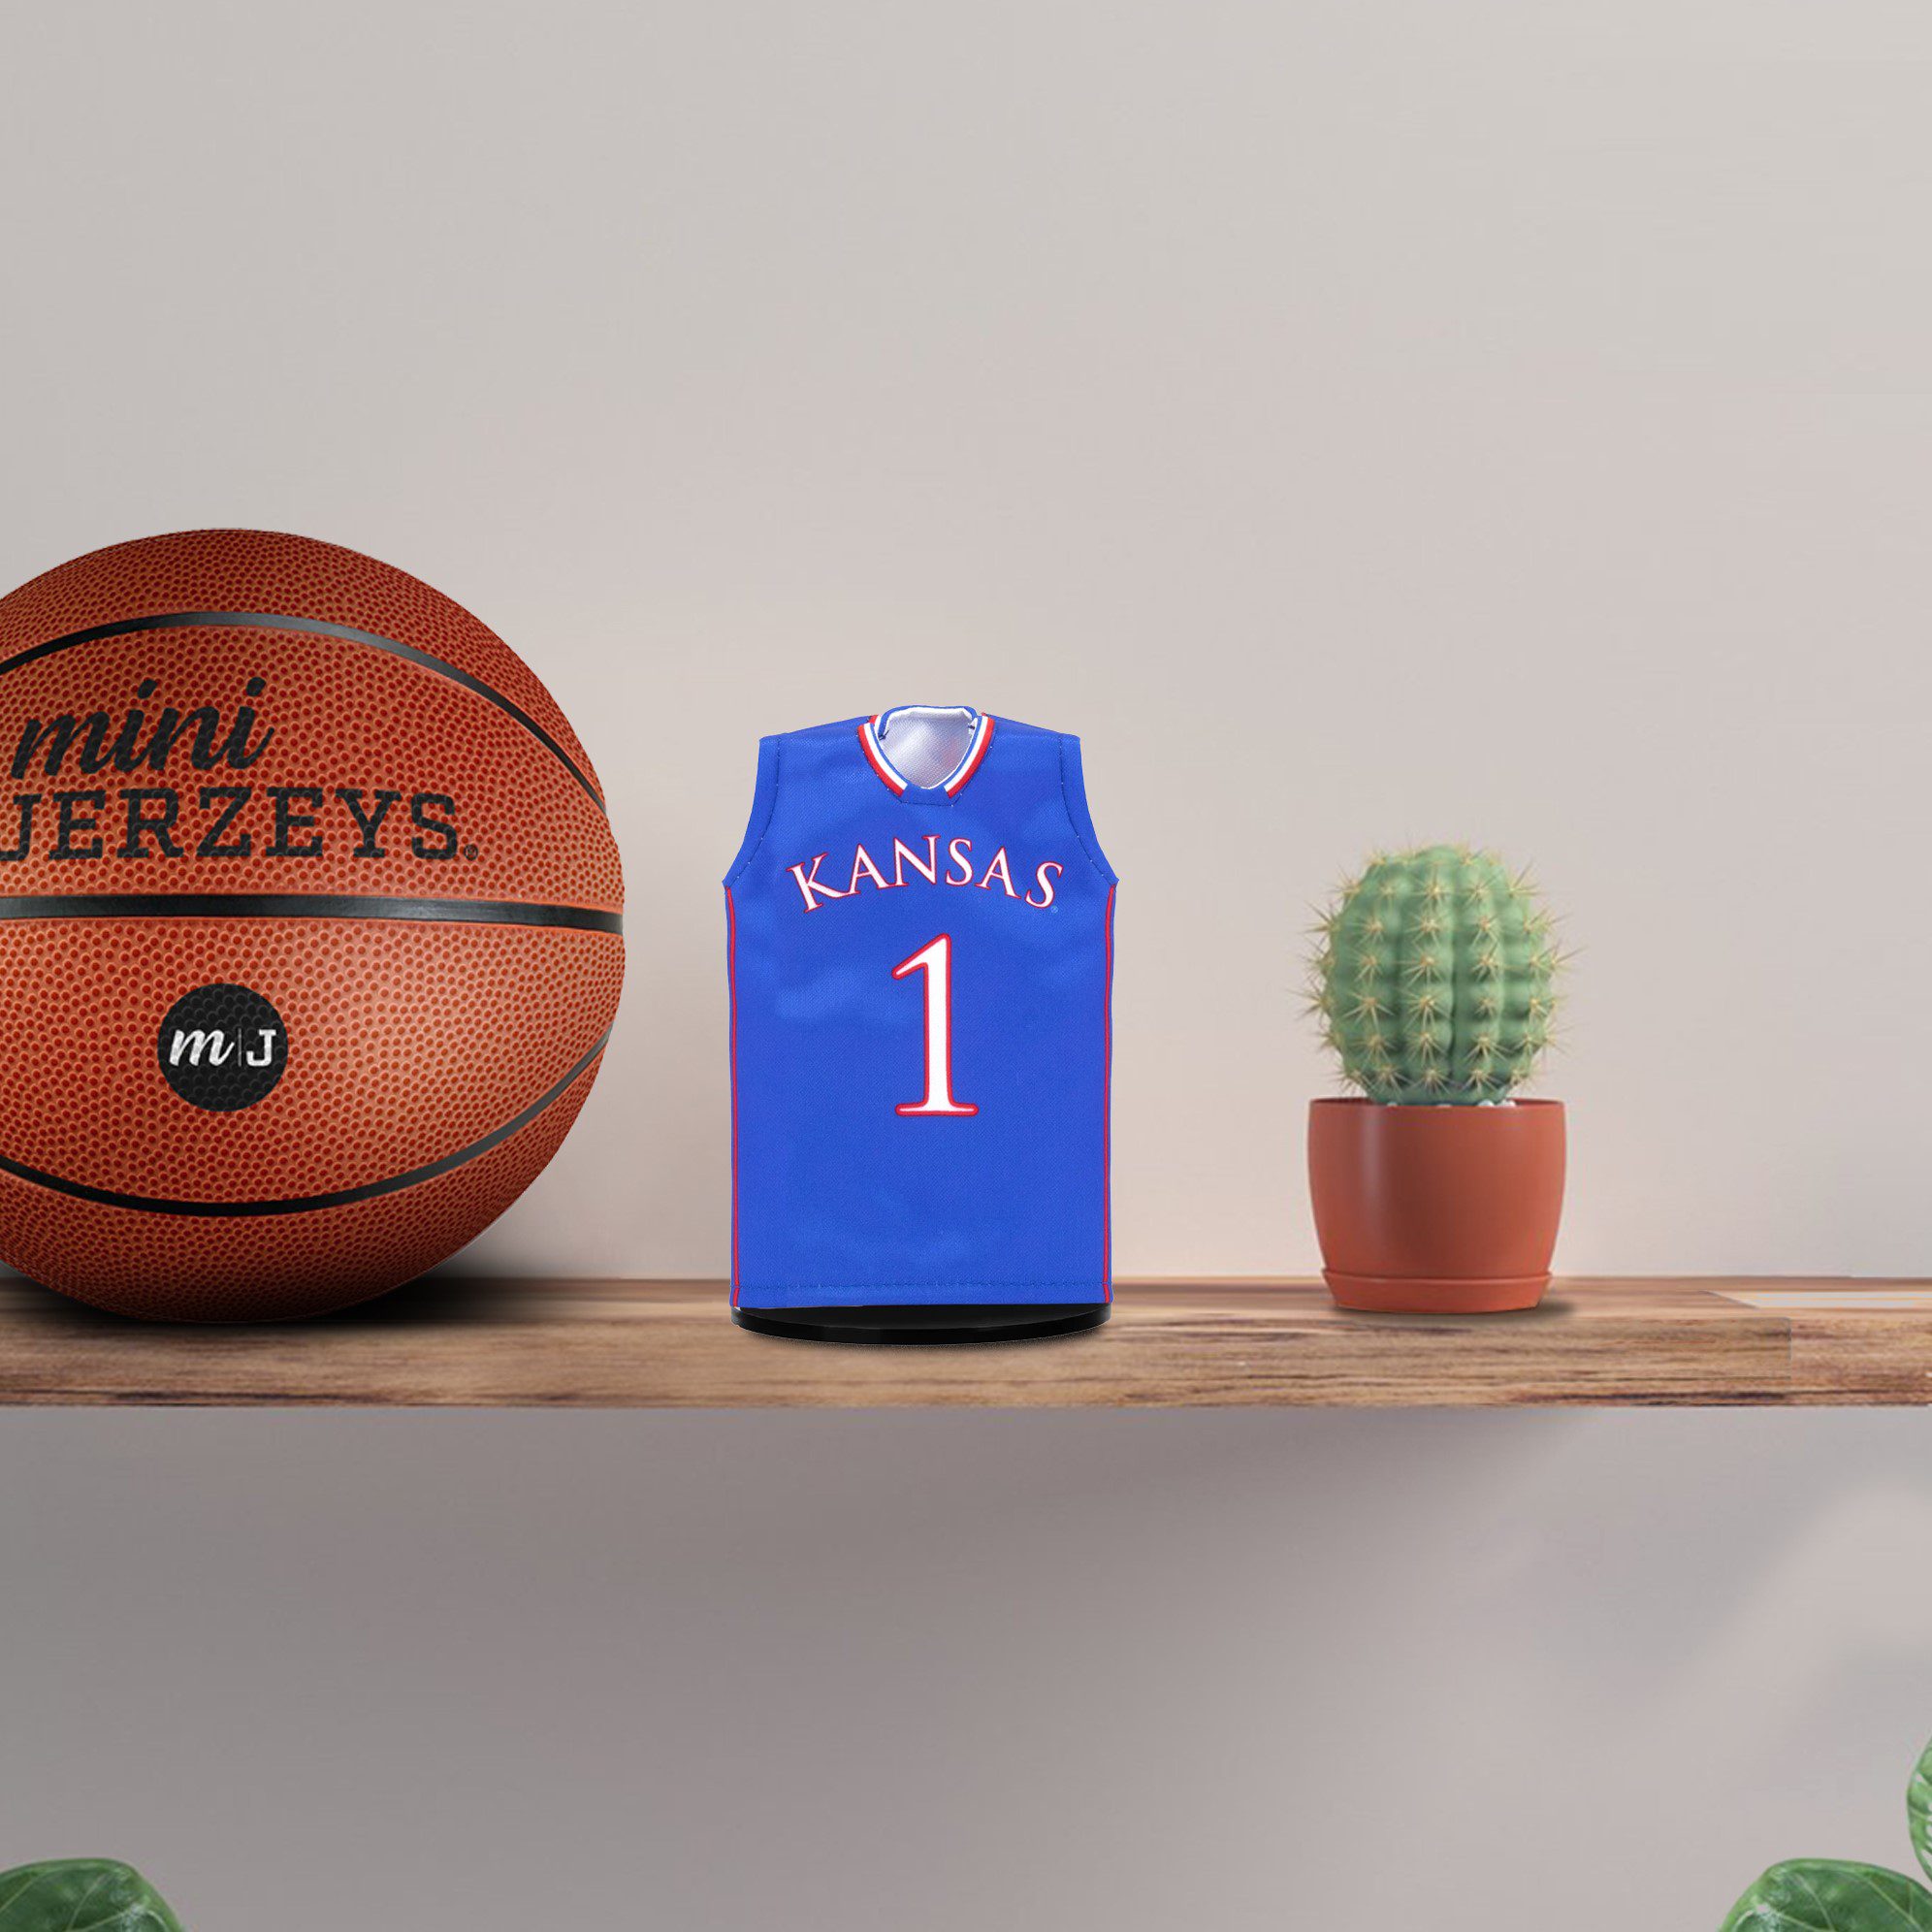 kansas basketball miniature sports jersey